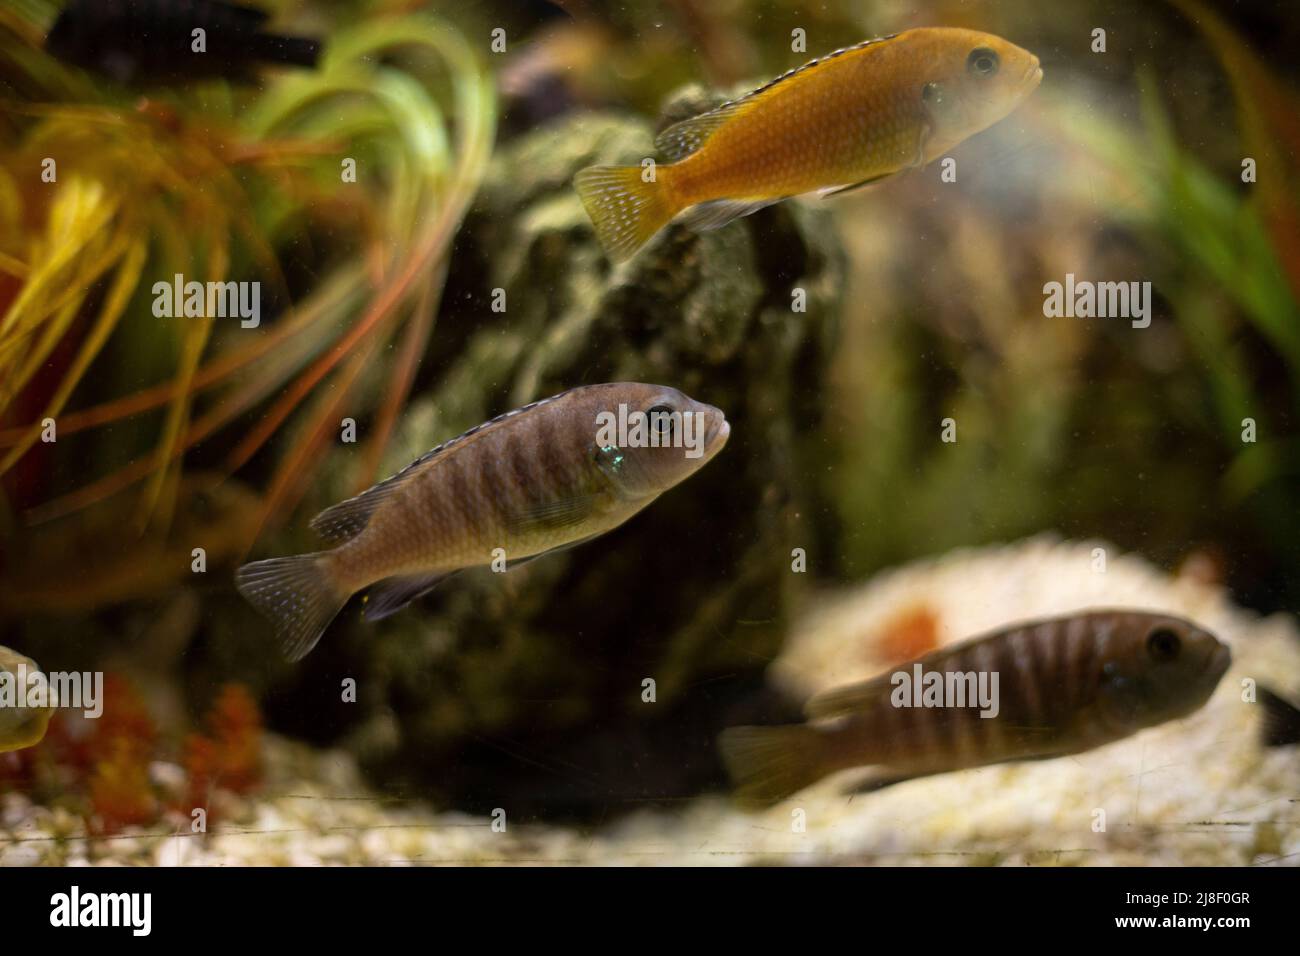 Fish in aquarium. Marine fish swim in water. Peaceful world. Aquatic fauna. Stock Photo